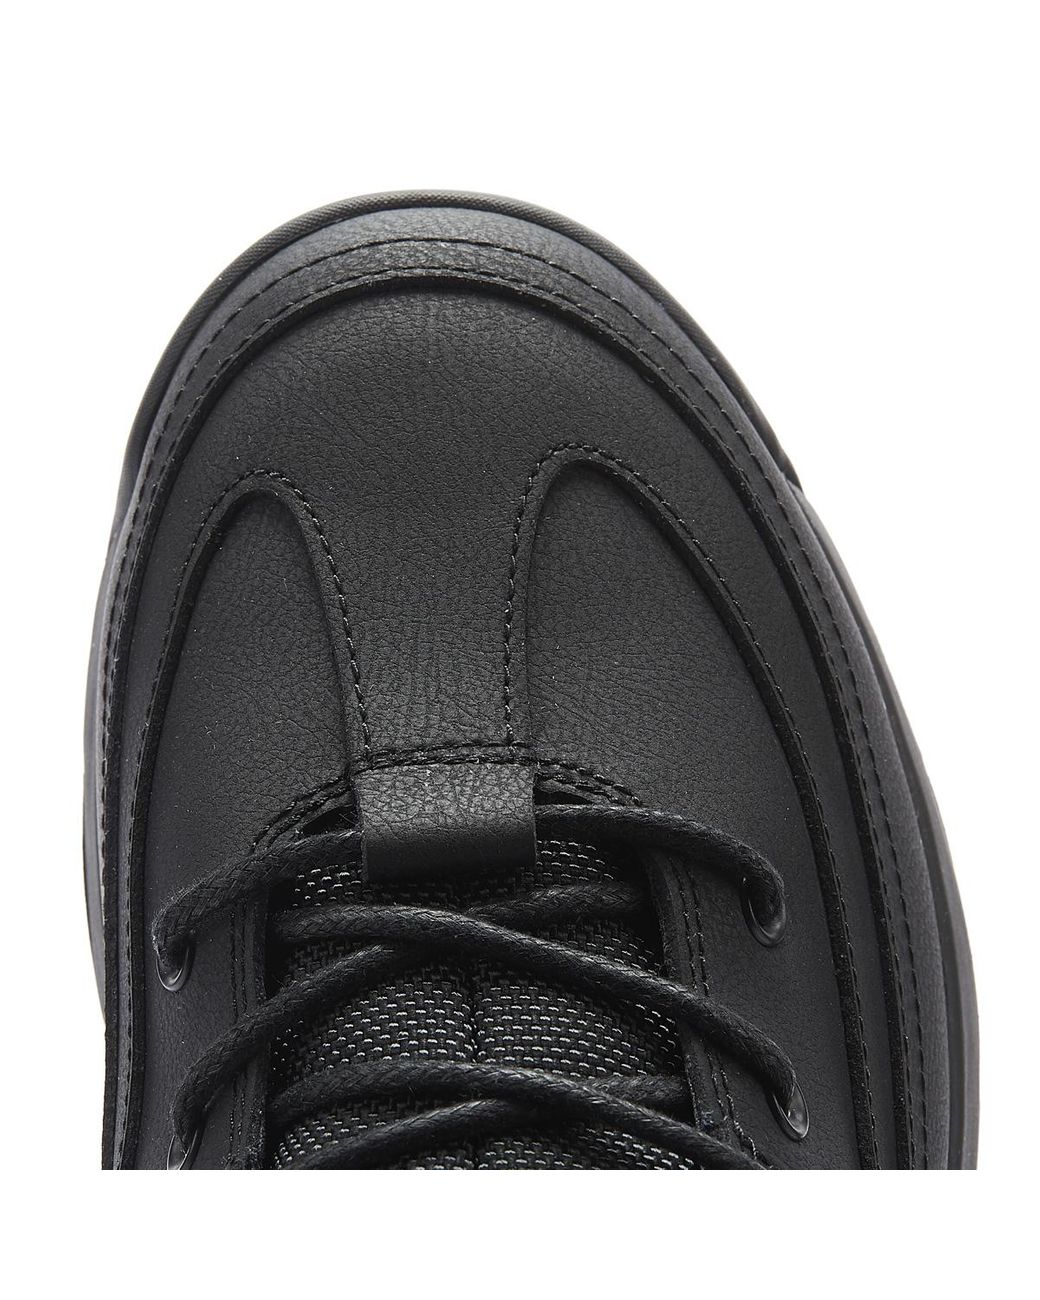 Lacoste Urban Breaker 419 2 Mens Black Boots for Men | Lyst UK